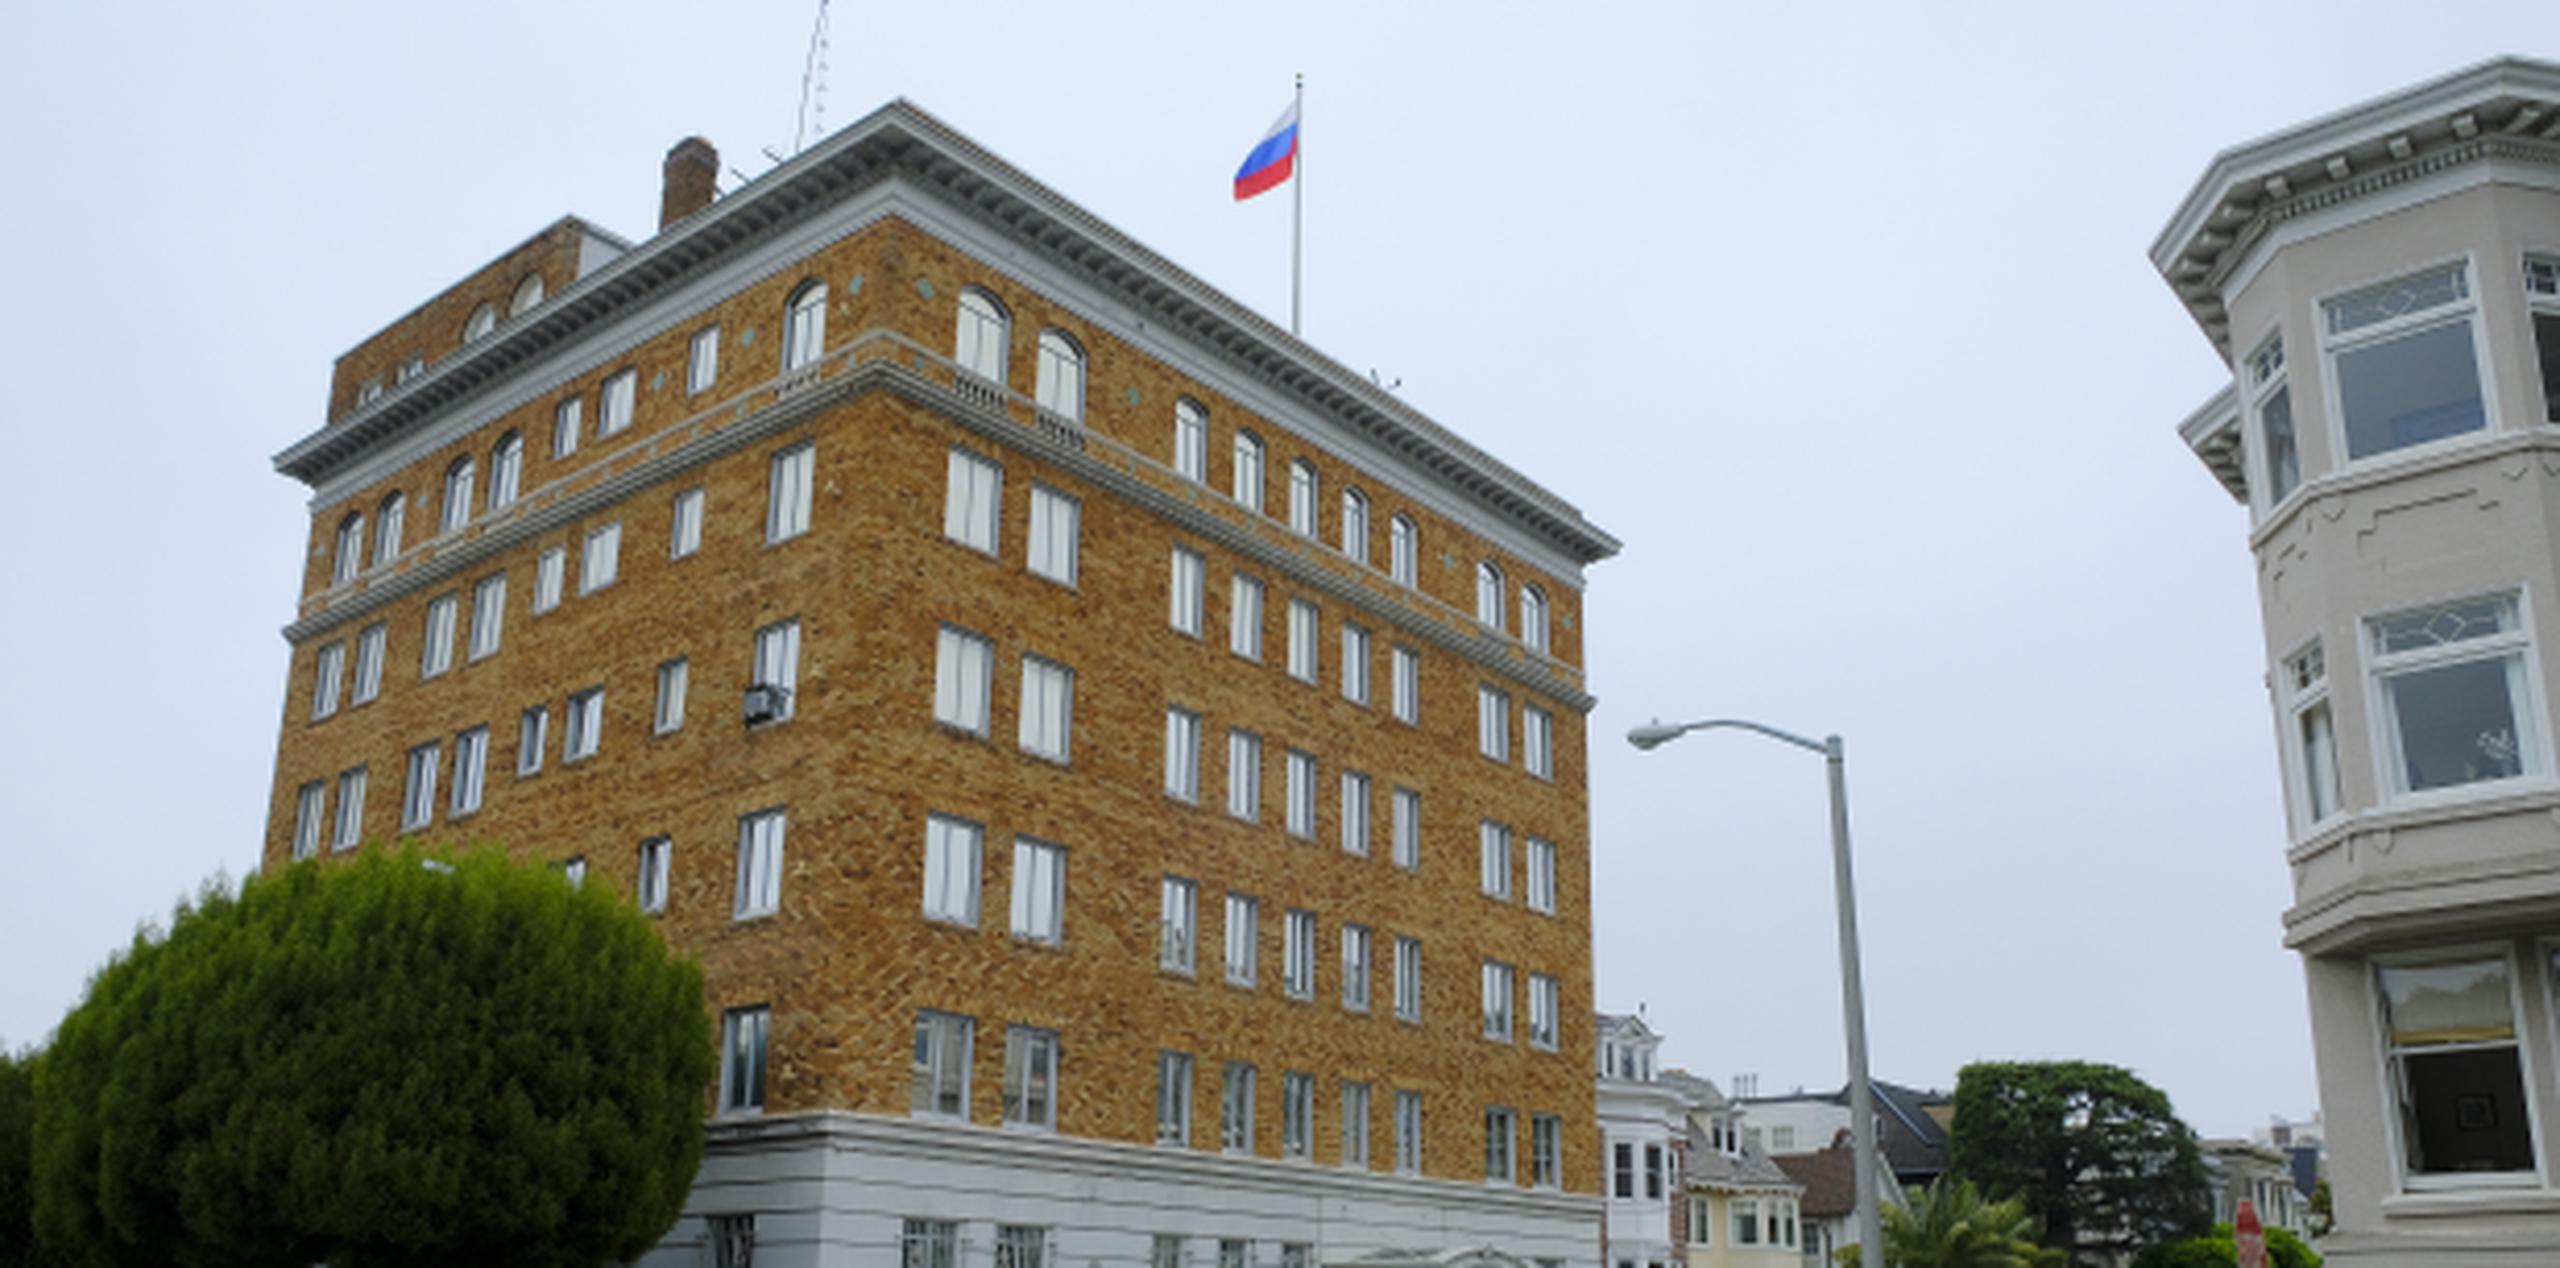 Sobre esta línea, el consulado ruso en San Francisco (AP /Eric Risberg)